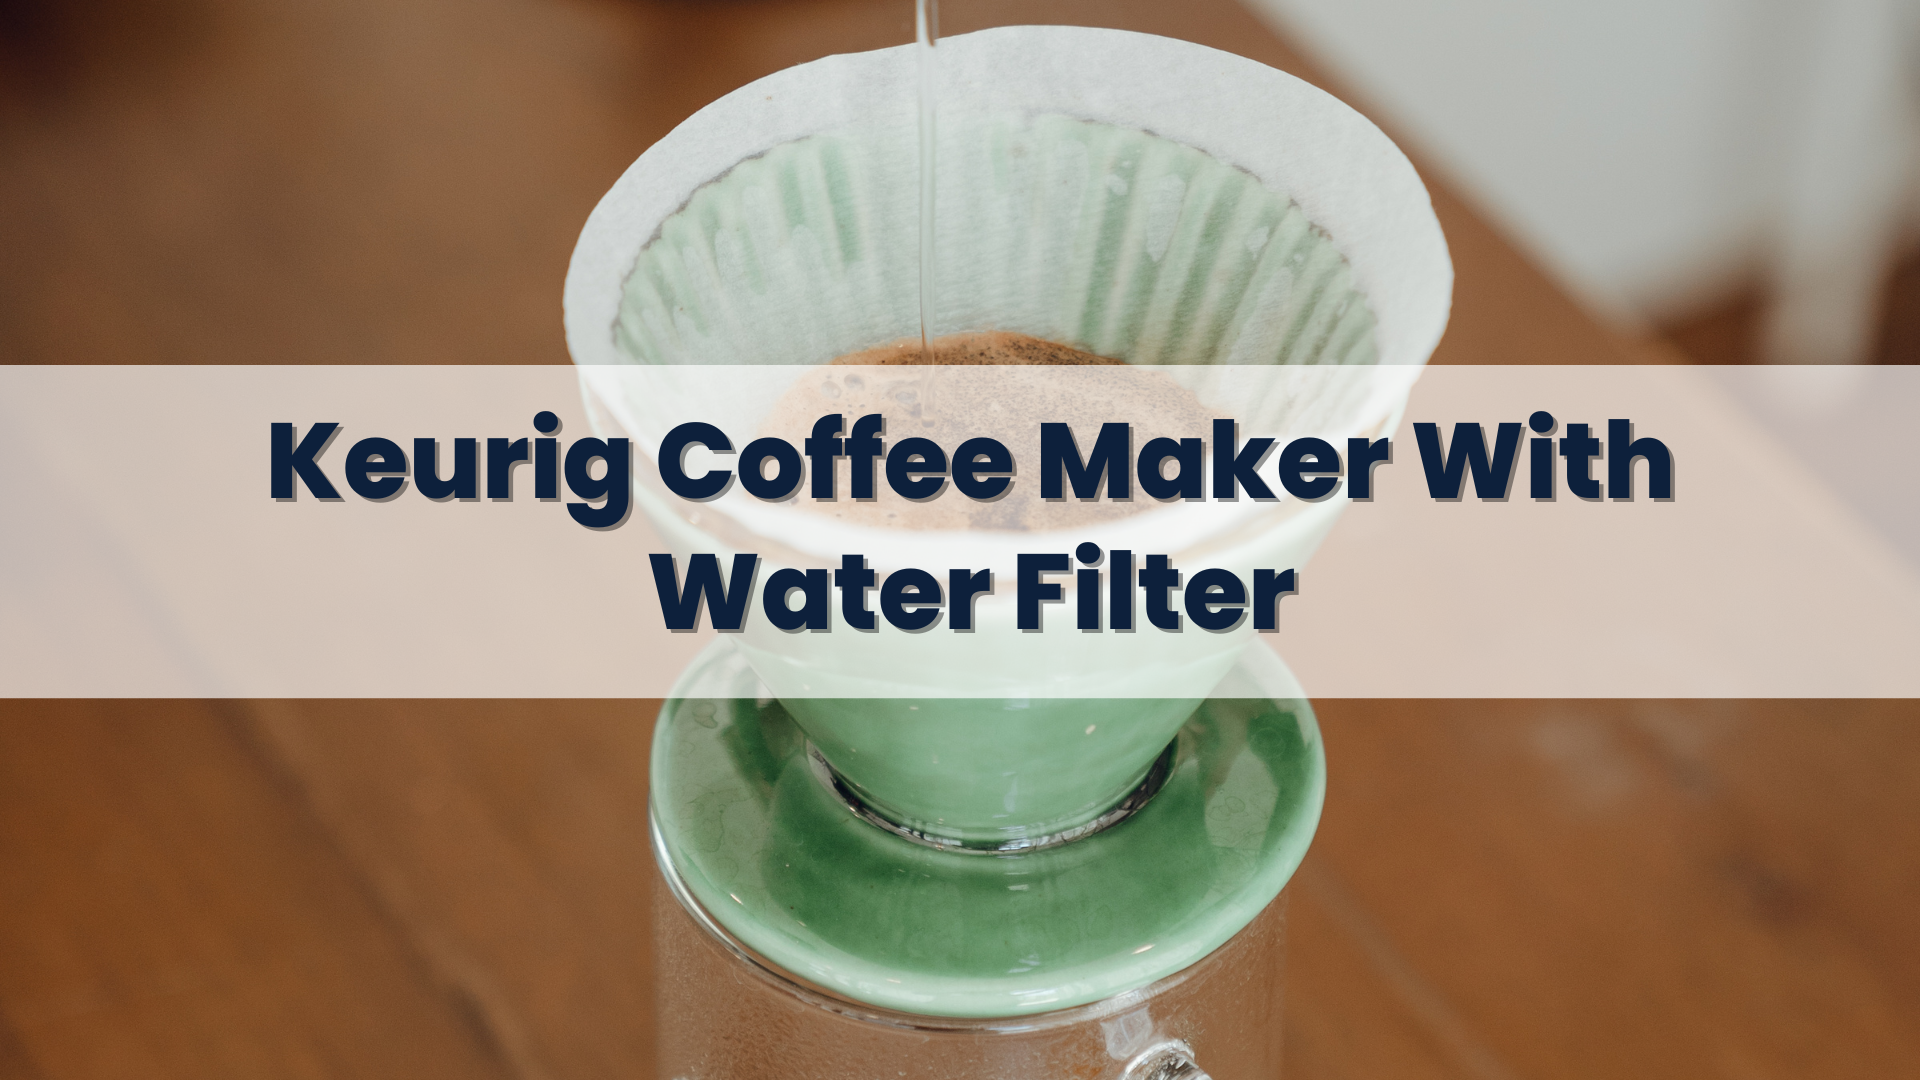 Keurig coffee maker with water filter